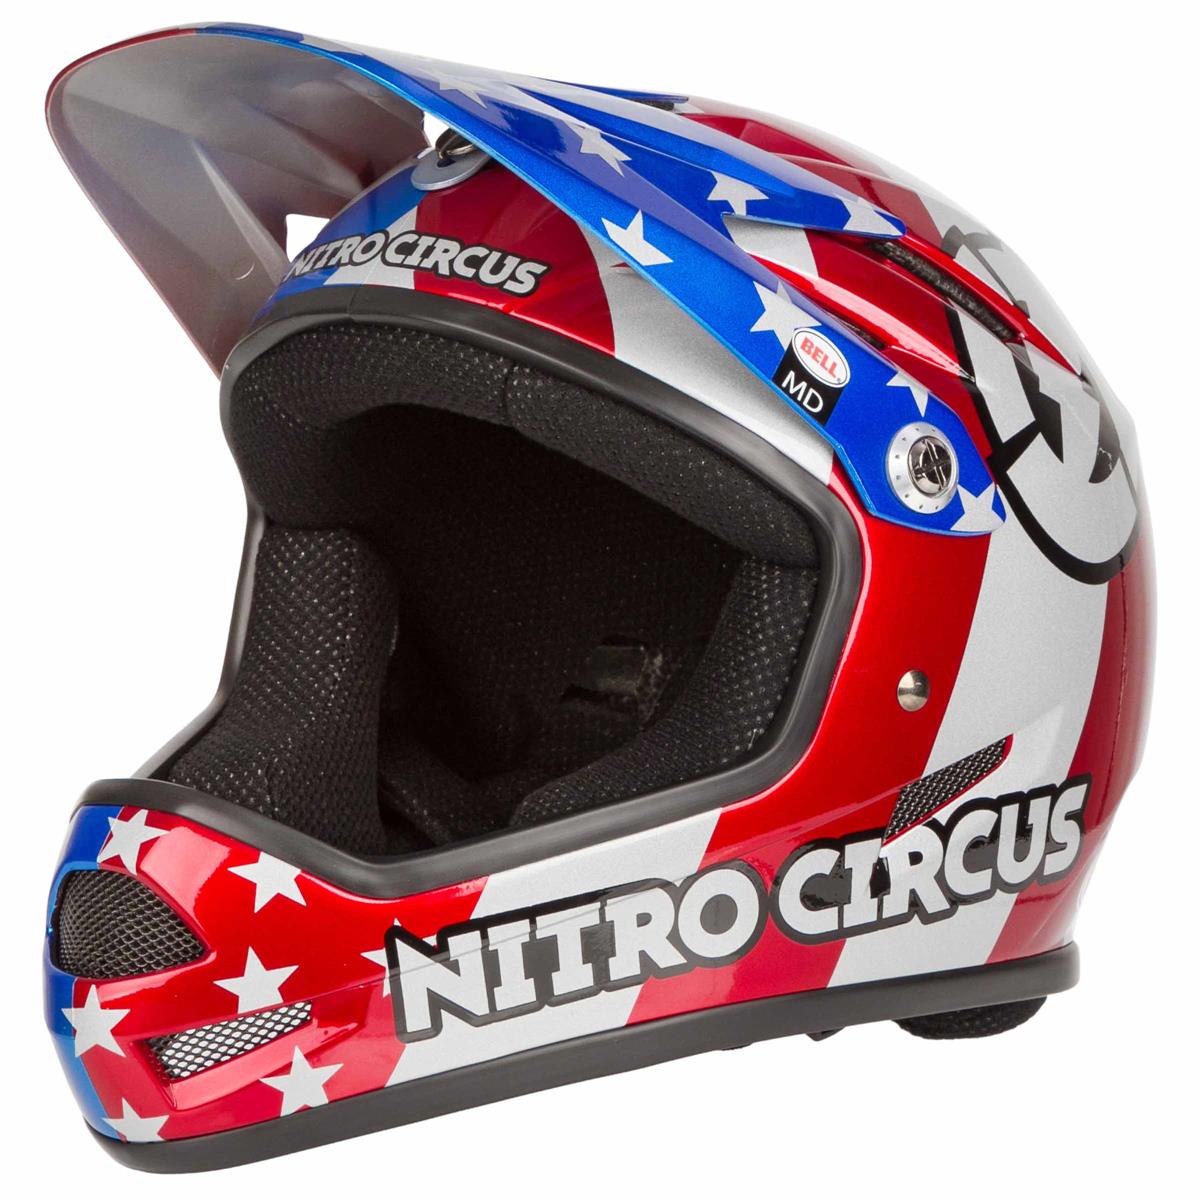 Bell Downhill MTB Helmet Sanction Nitro Circus - Red/Silver/Blue